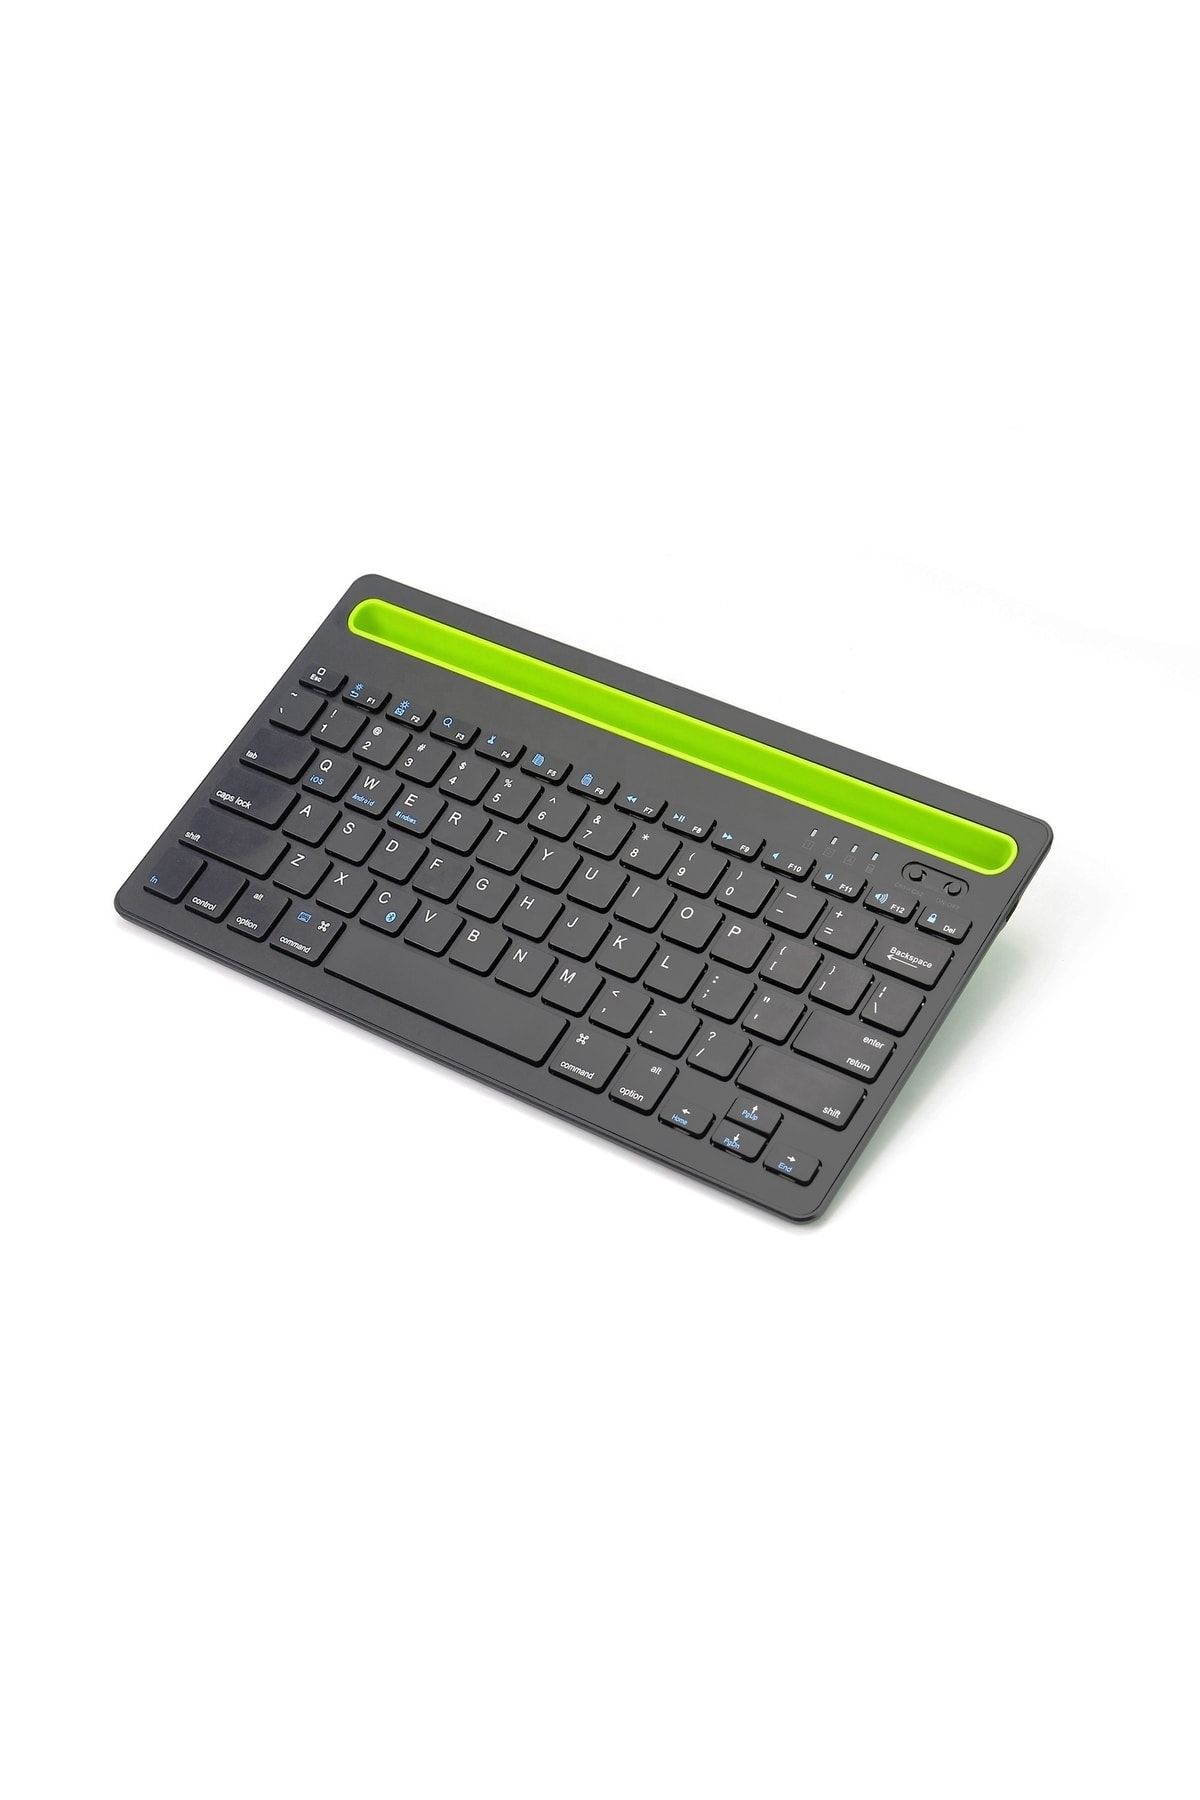 HİQONİC Bluetooth 5.0 Standlı Türkçe Q Klavye Bilgisayar Telefon Tablet Televizyon Uyumlu Keyboard